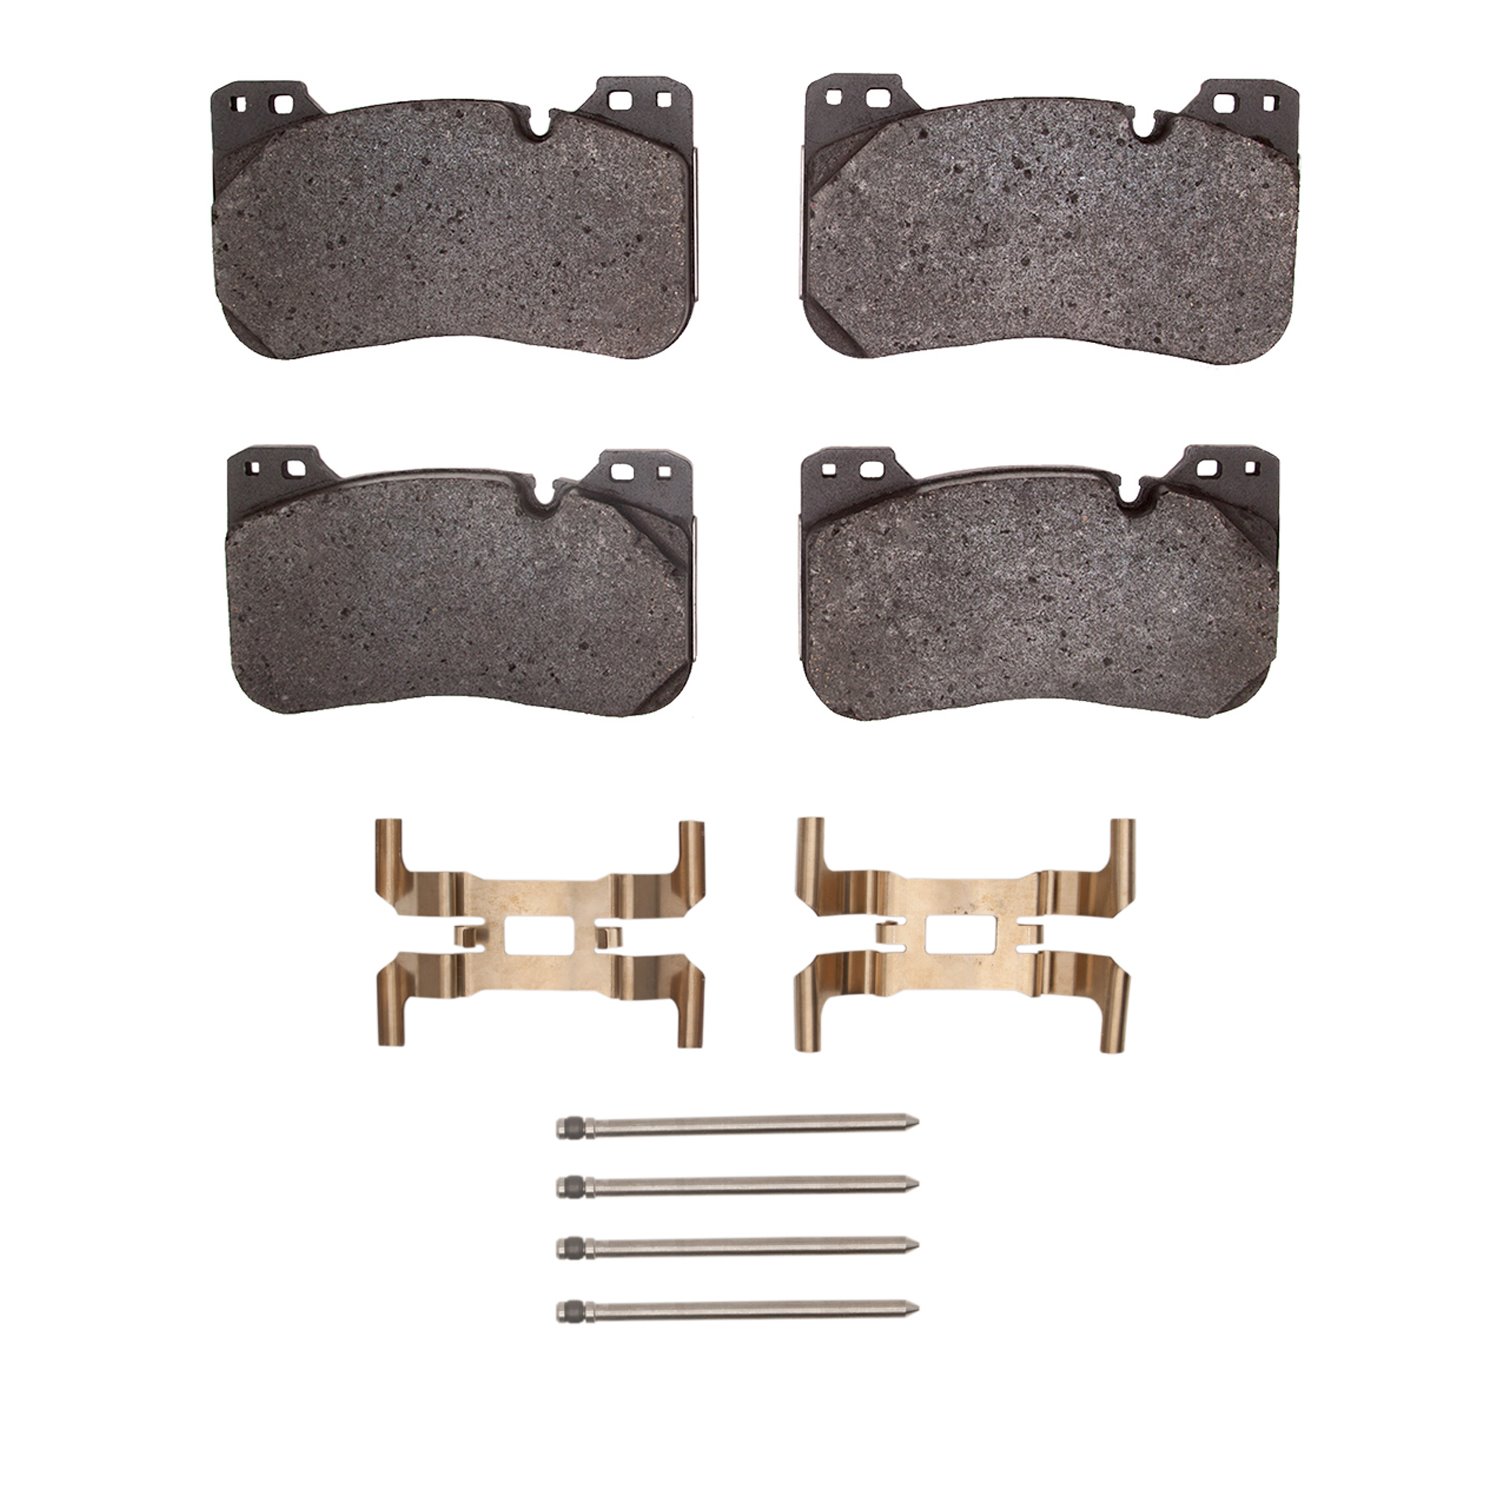 1552-2155-01 5000 Advanced Low-Metallic Brake Pads & Hardware Kit, Fits Select BMW, Position: Front